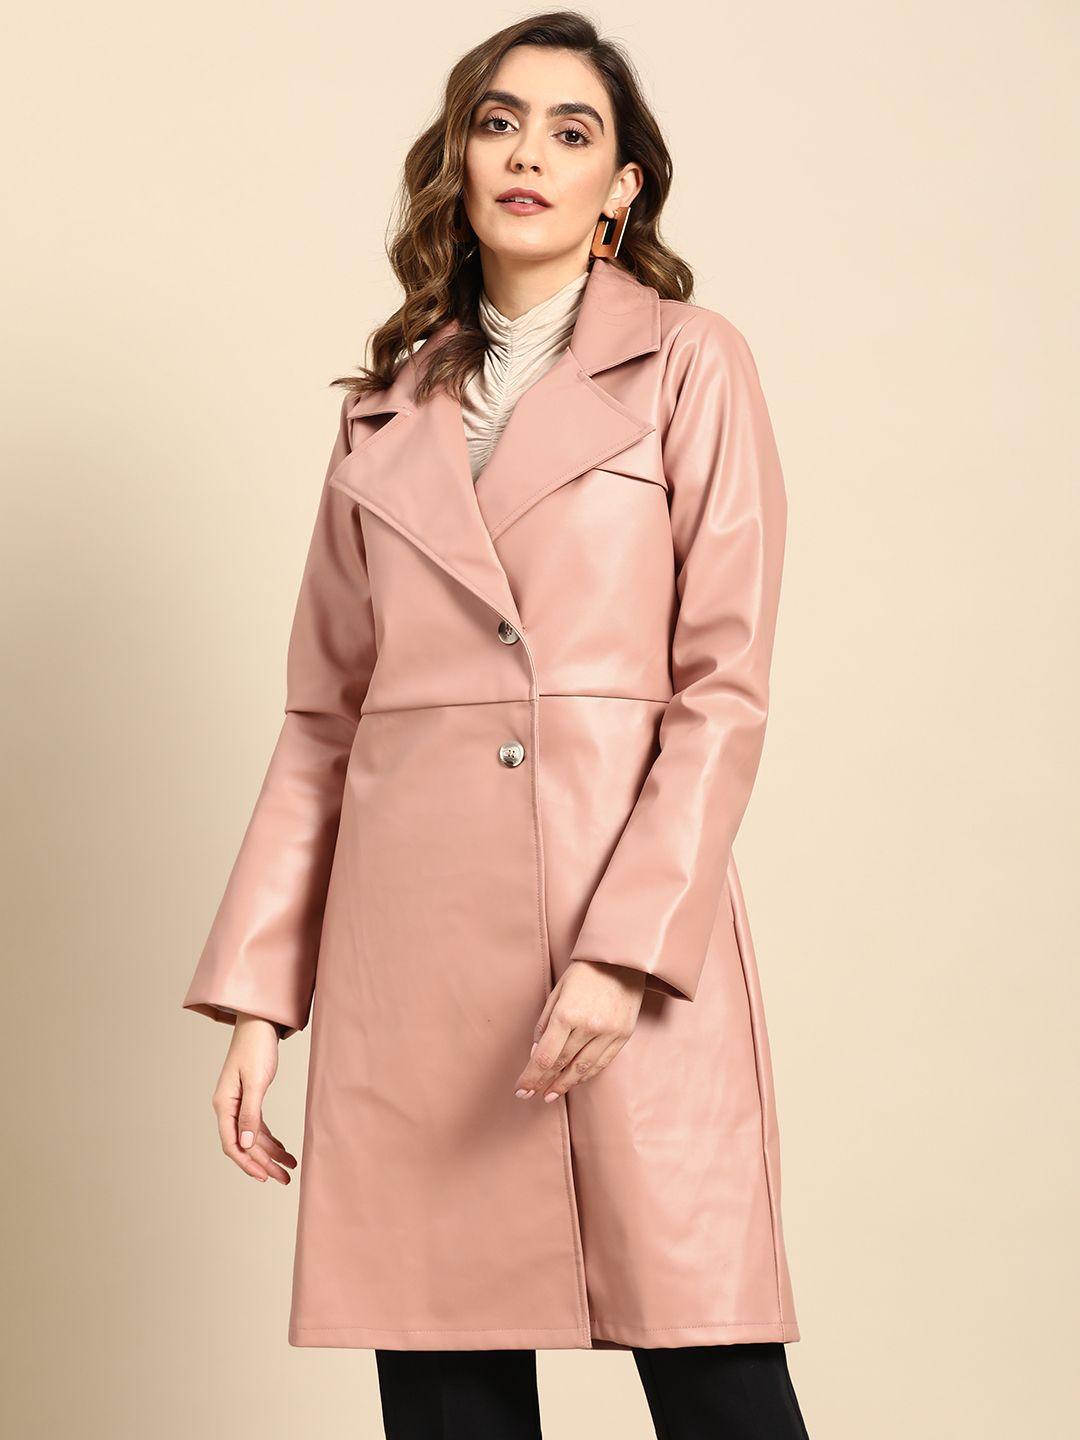 athena women leather overcoat